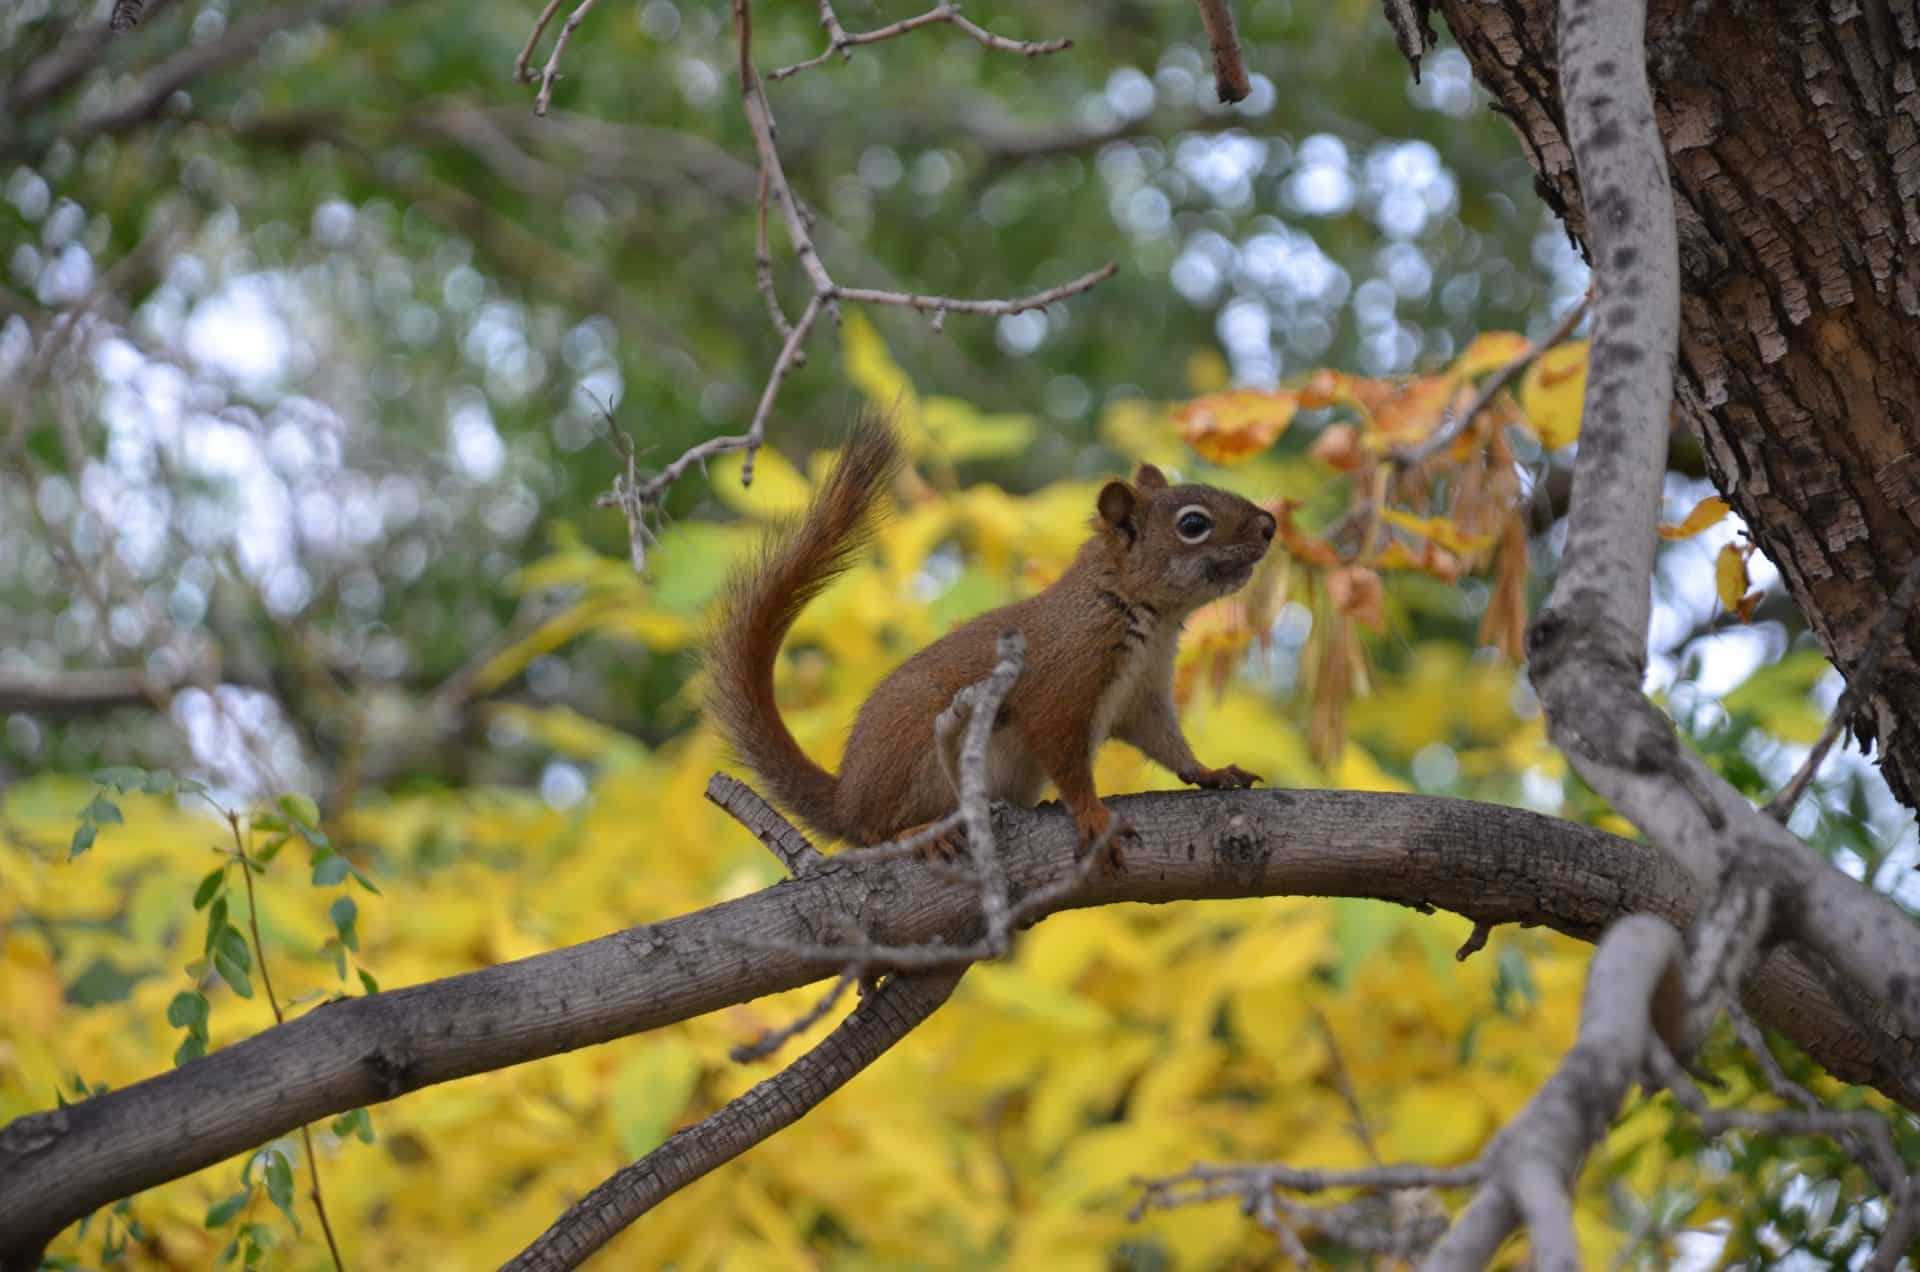 Squirrel in a tree in fall / Écureuil dans un arbre en automne